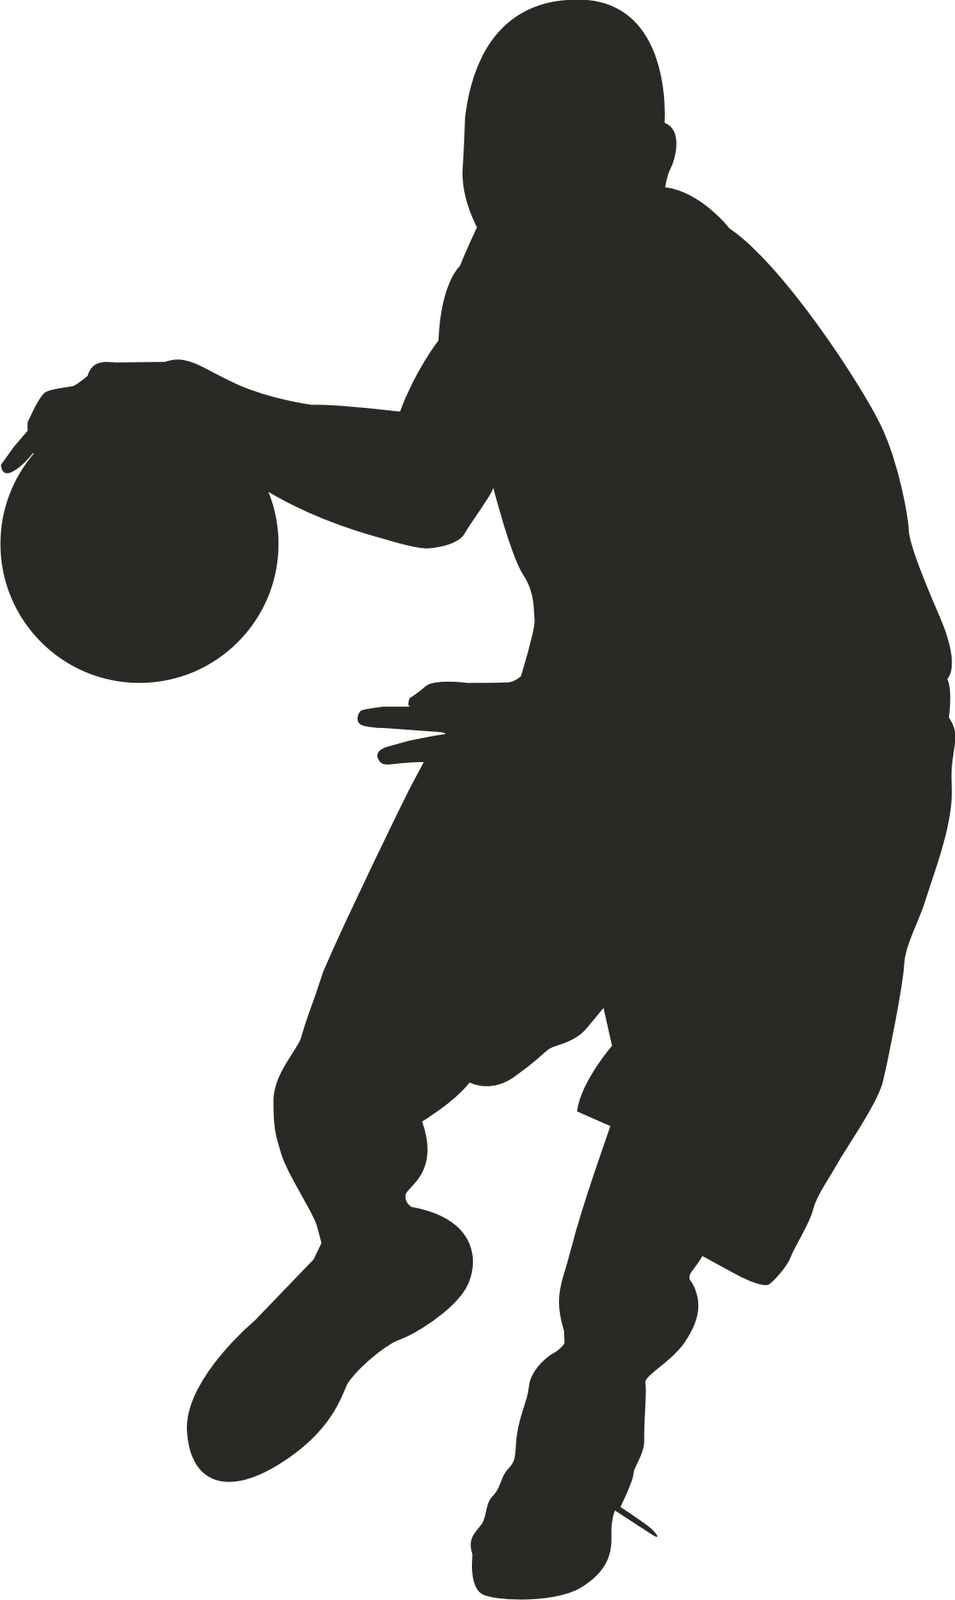 Clip Art Basketball Blocked Shots | Clipart Panda - Free Clipart ...